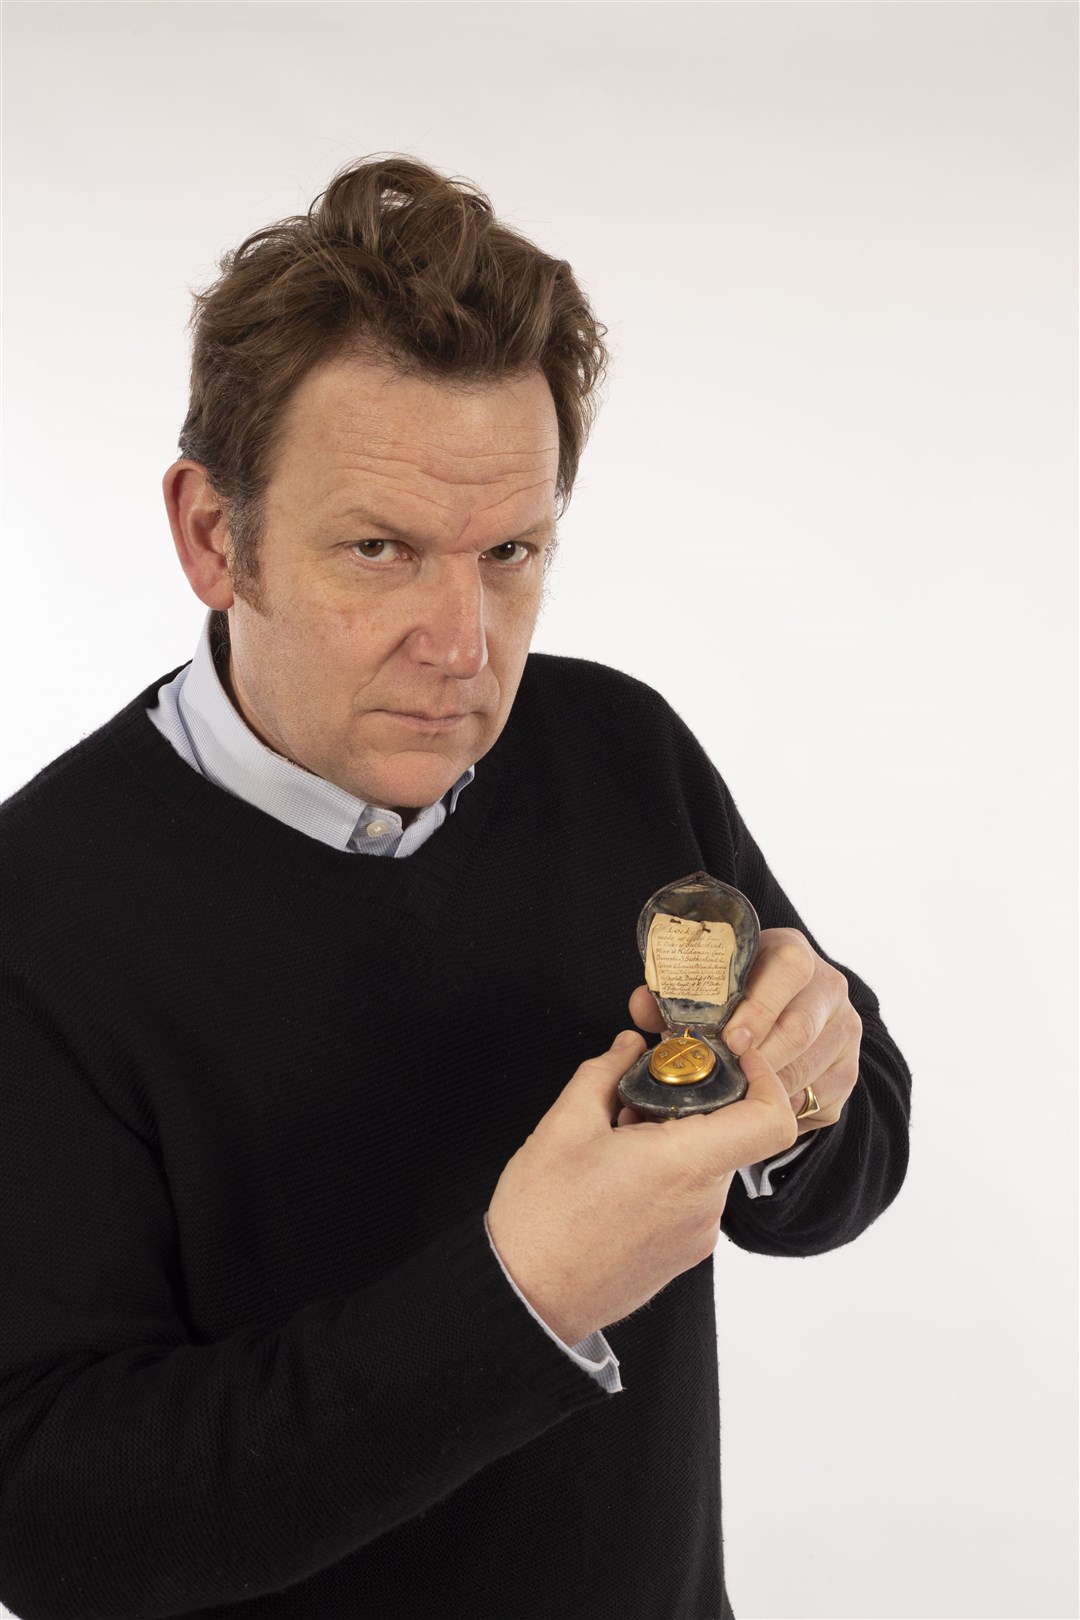 Chorley's director Thomas Jenner-Fust described the Kildonan gold locket as "unique".